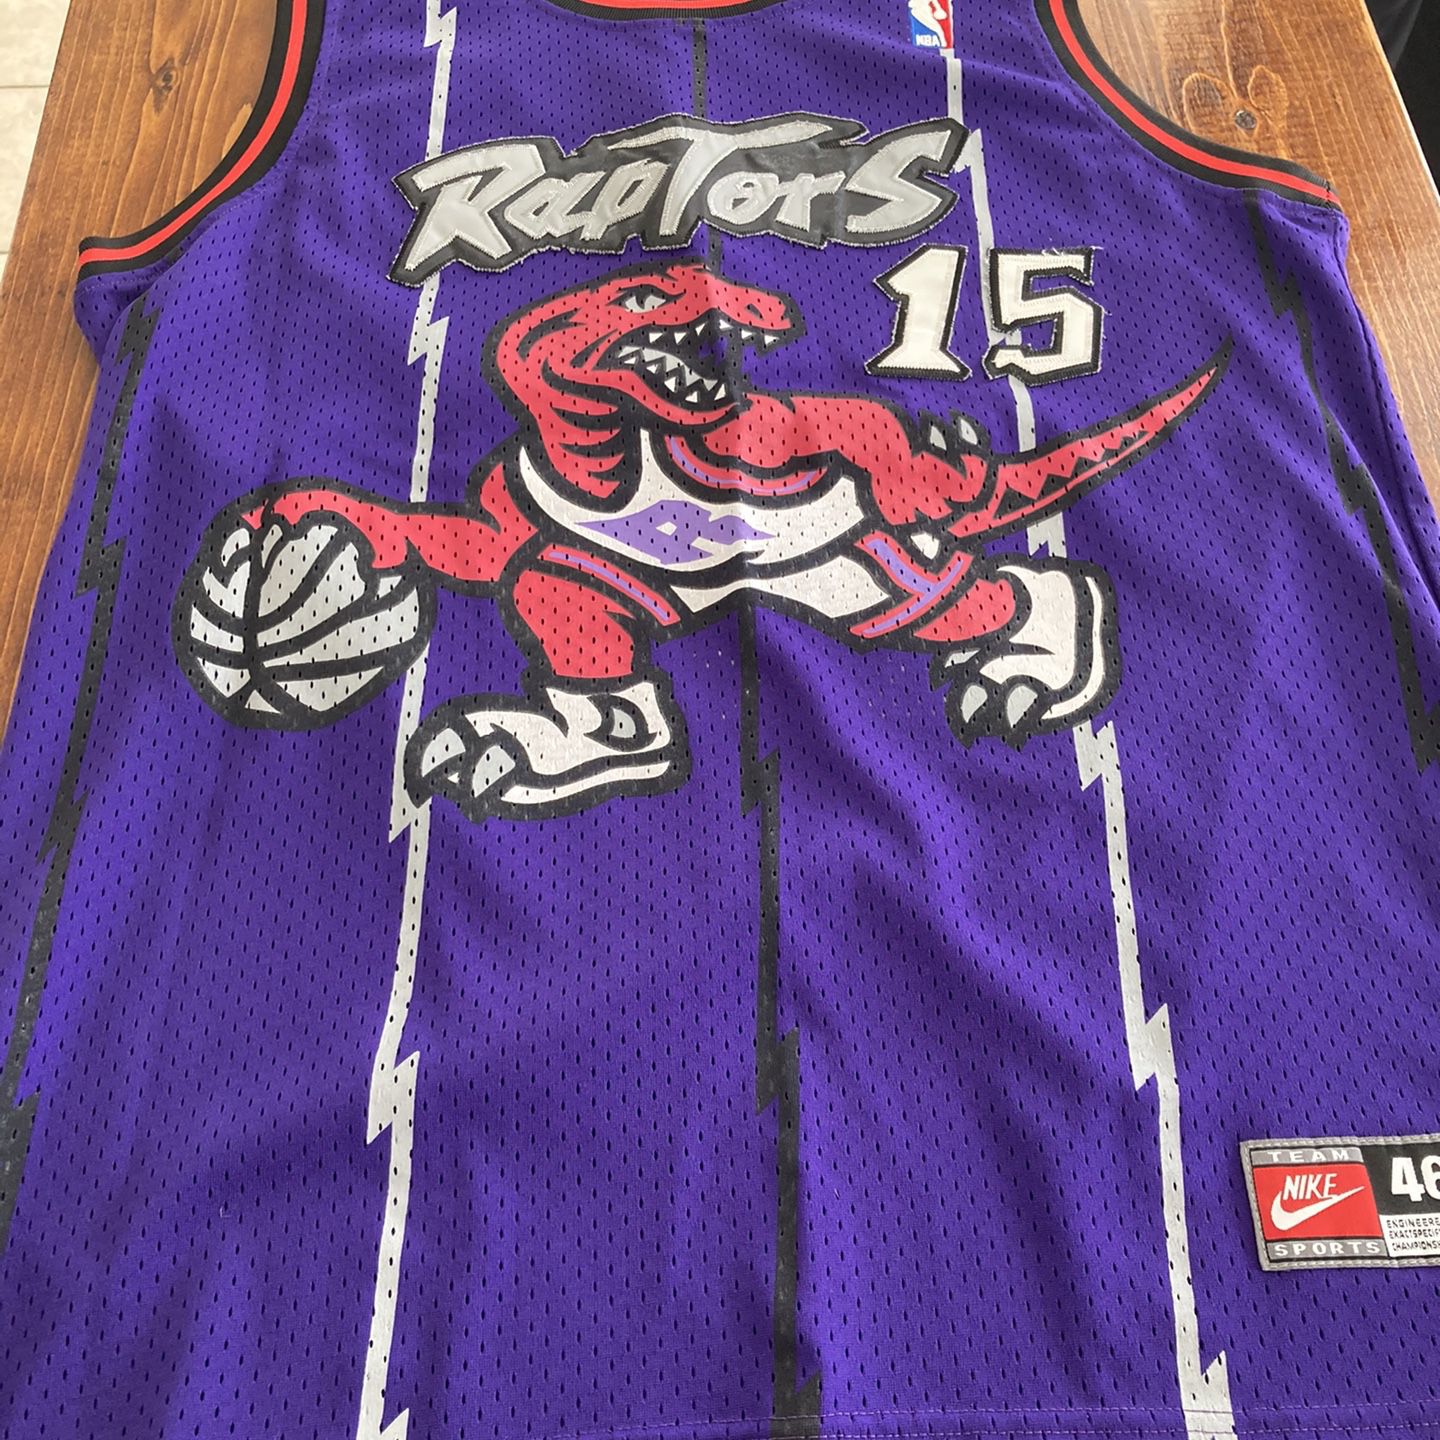 Tampa Bay Raptors Team Sweatshirt Buy Basketball